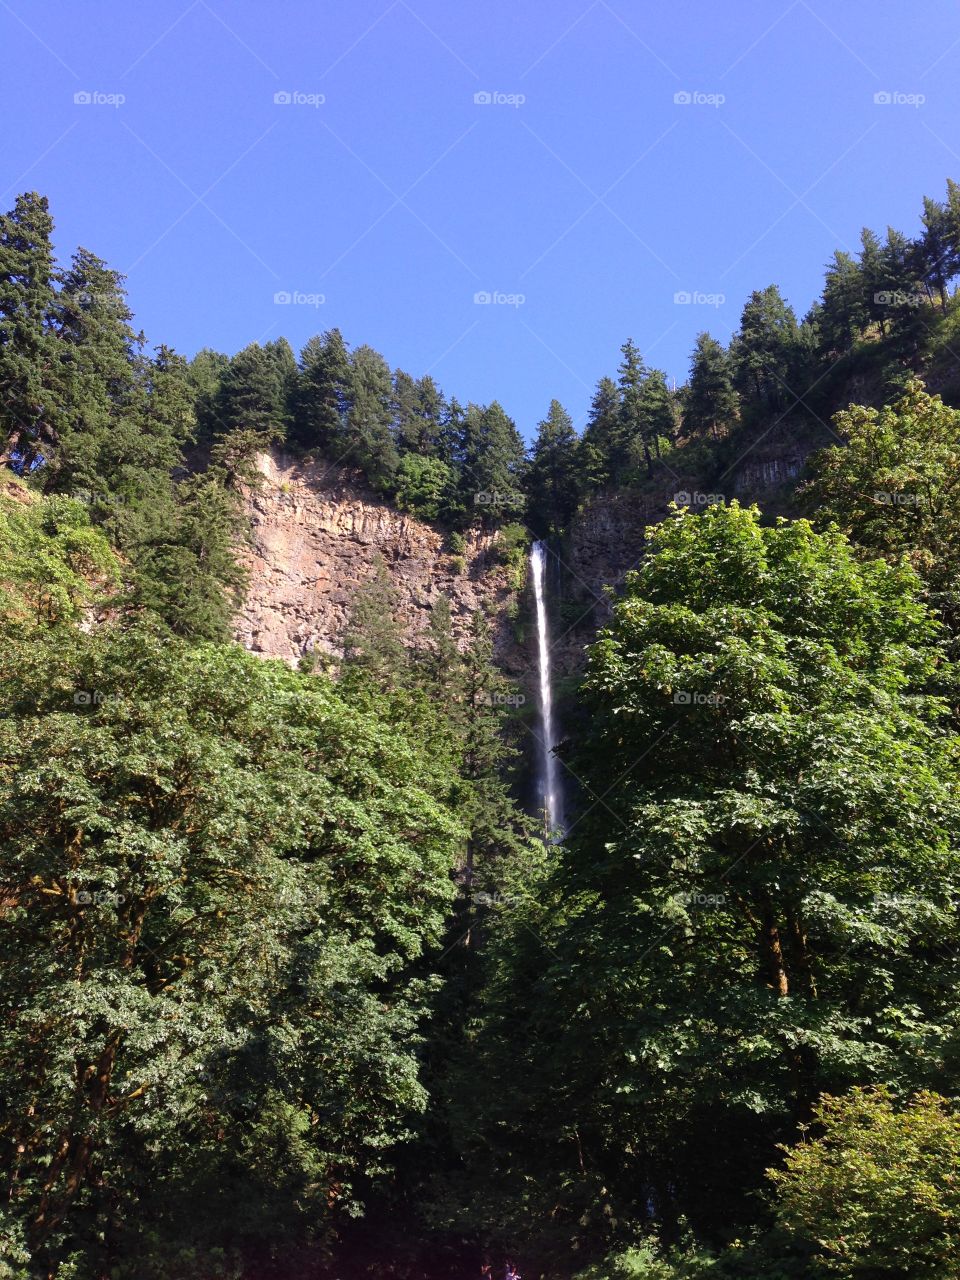 Top of Multnomah Falls outside of Portland, OR.